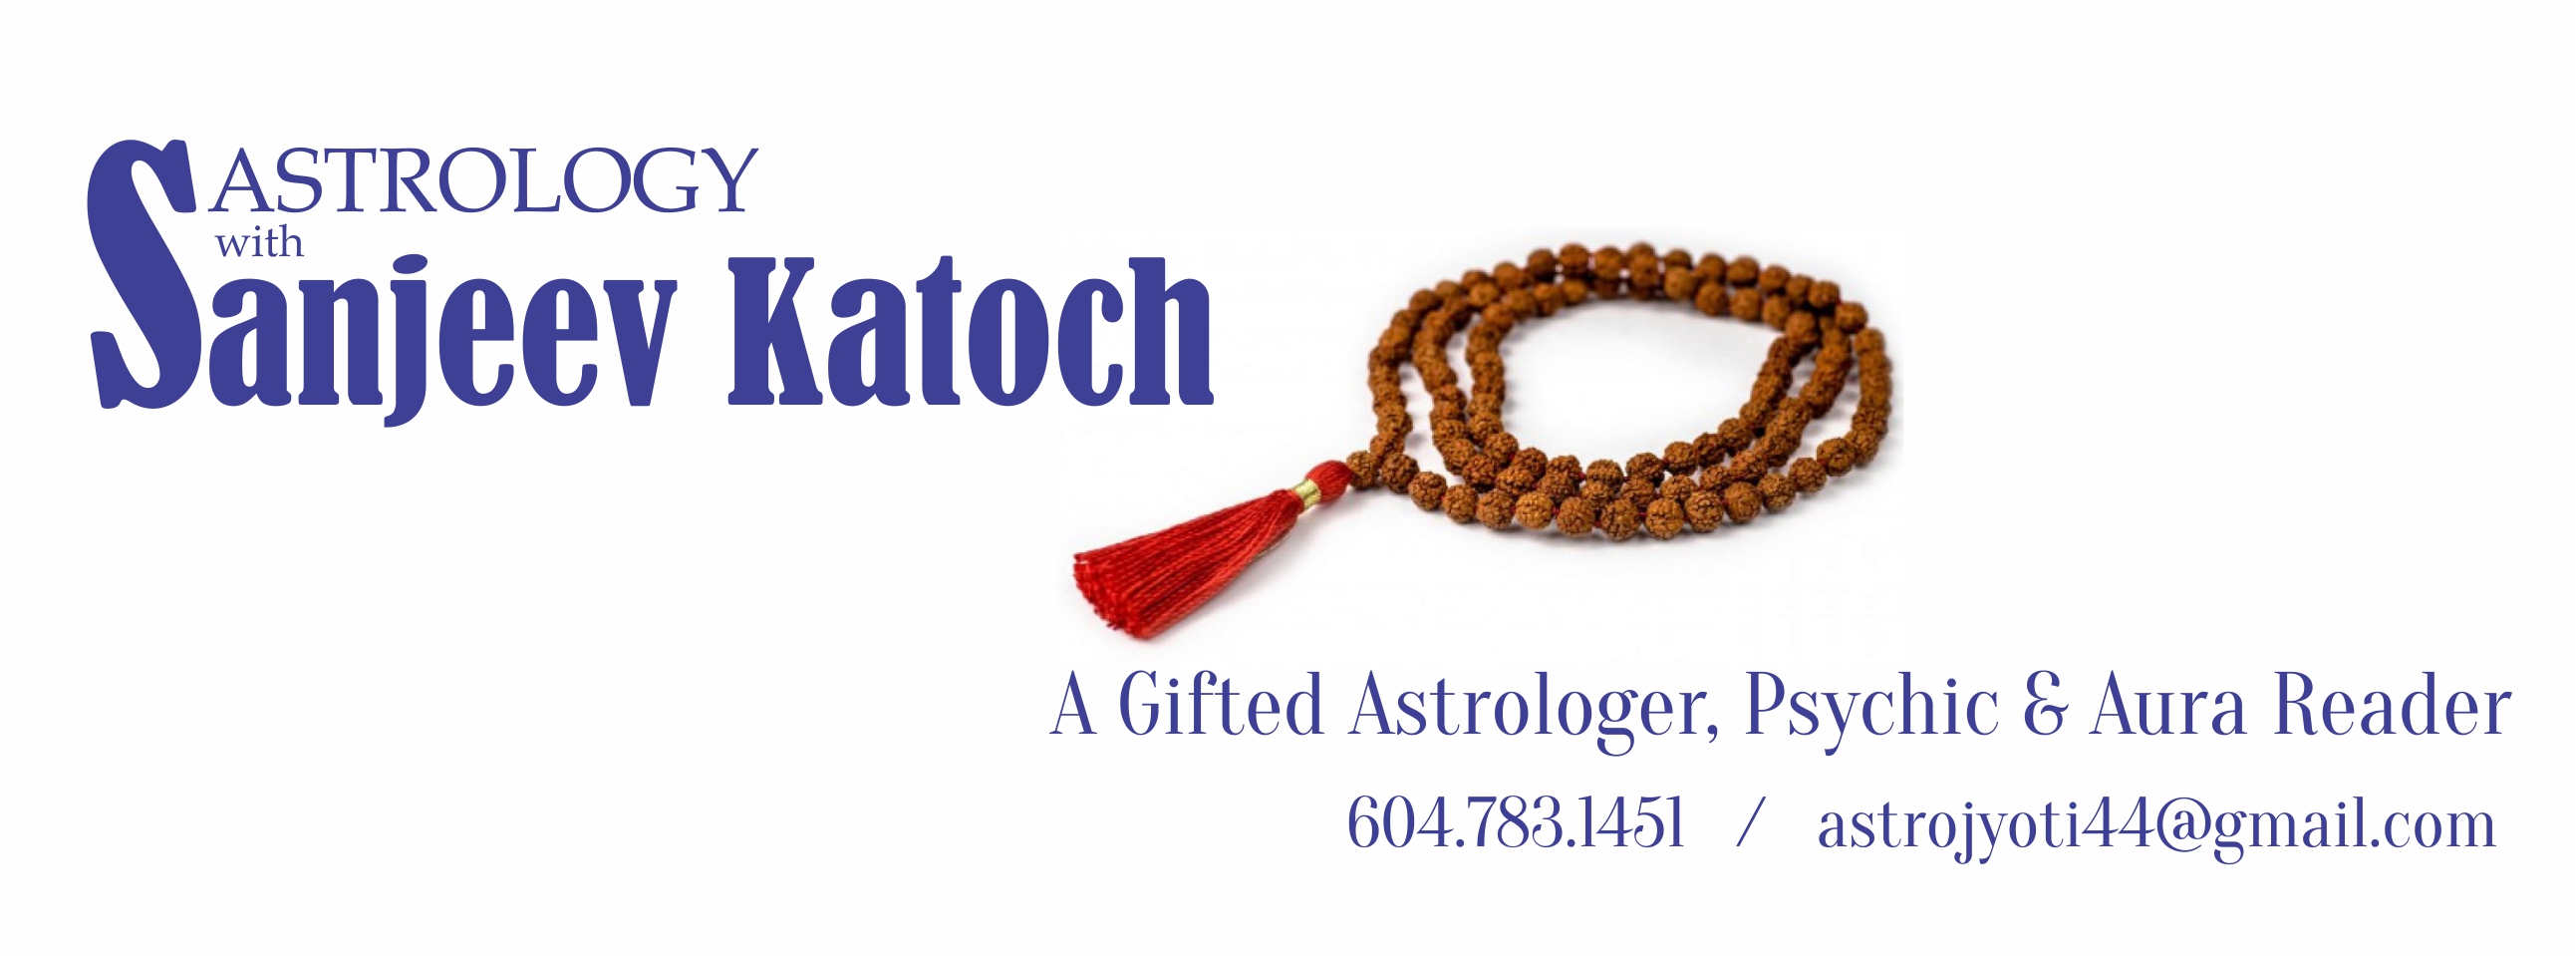 Vastu Shastra with Astrologer Sanjeev Katoch